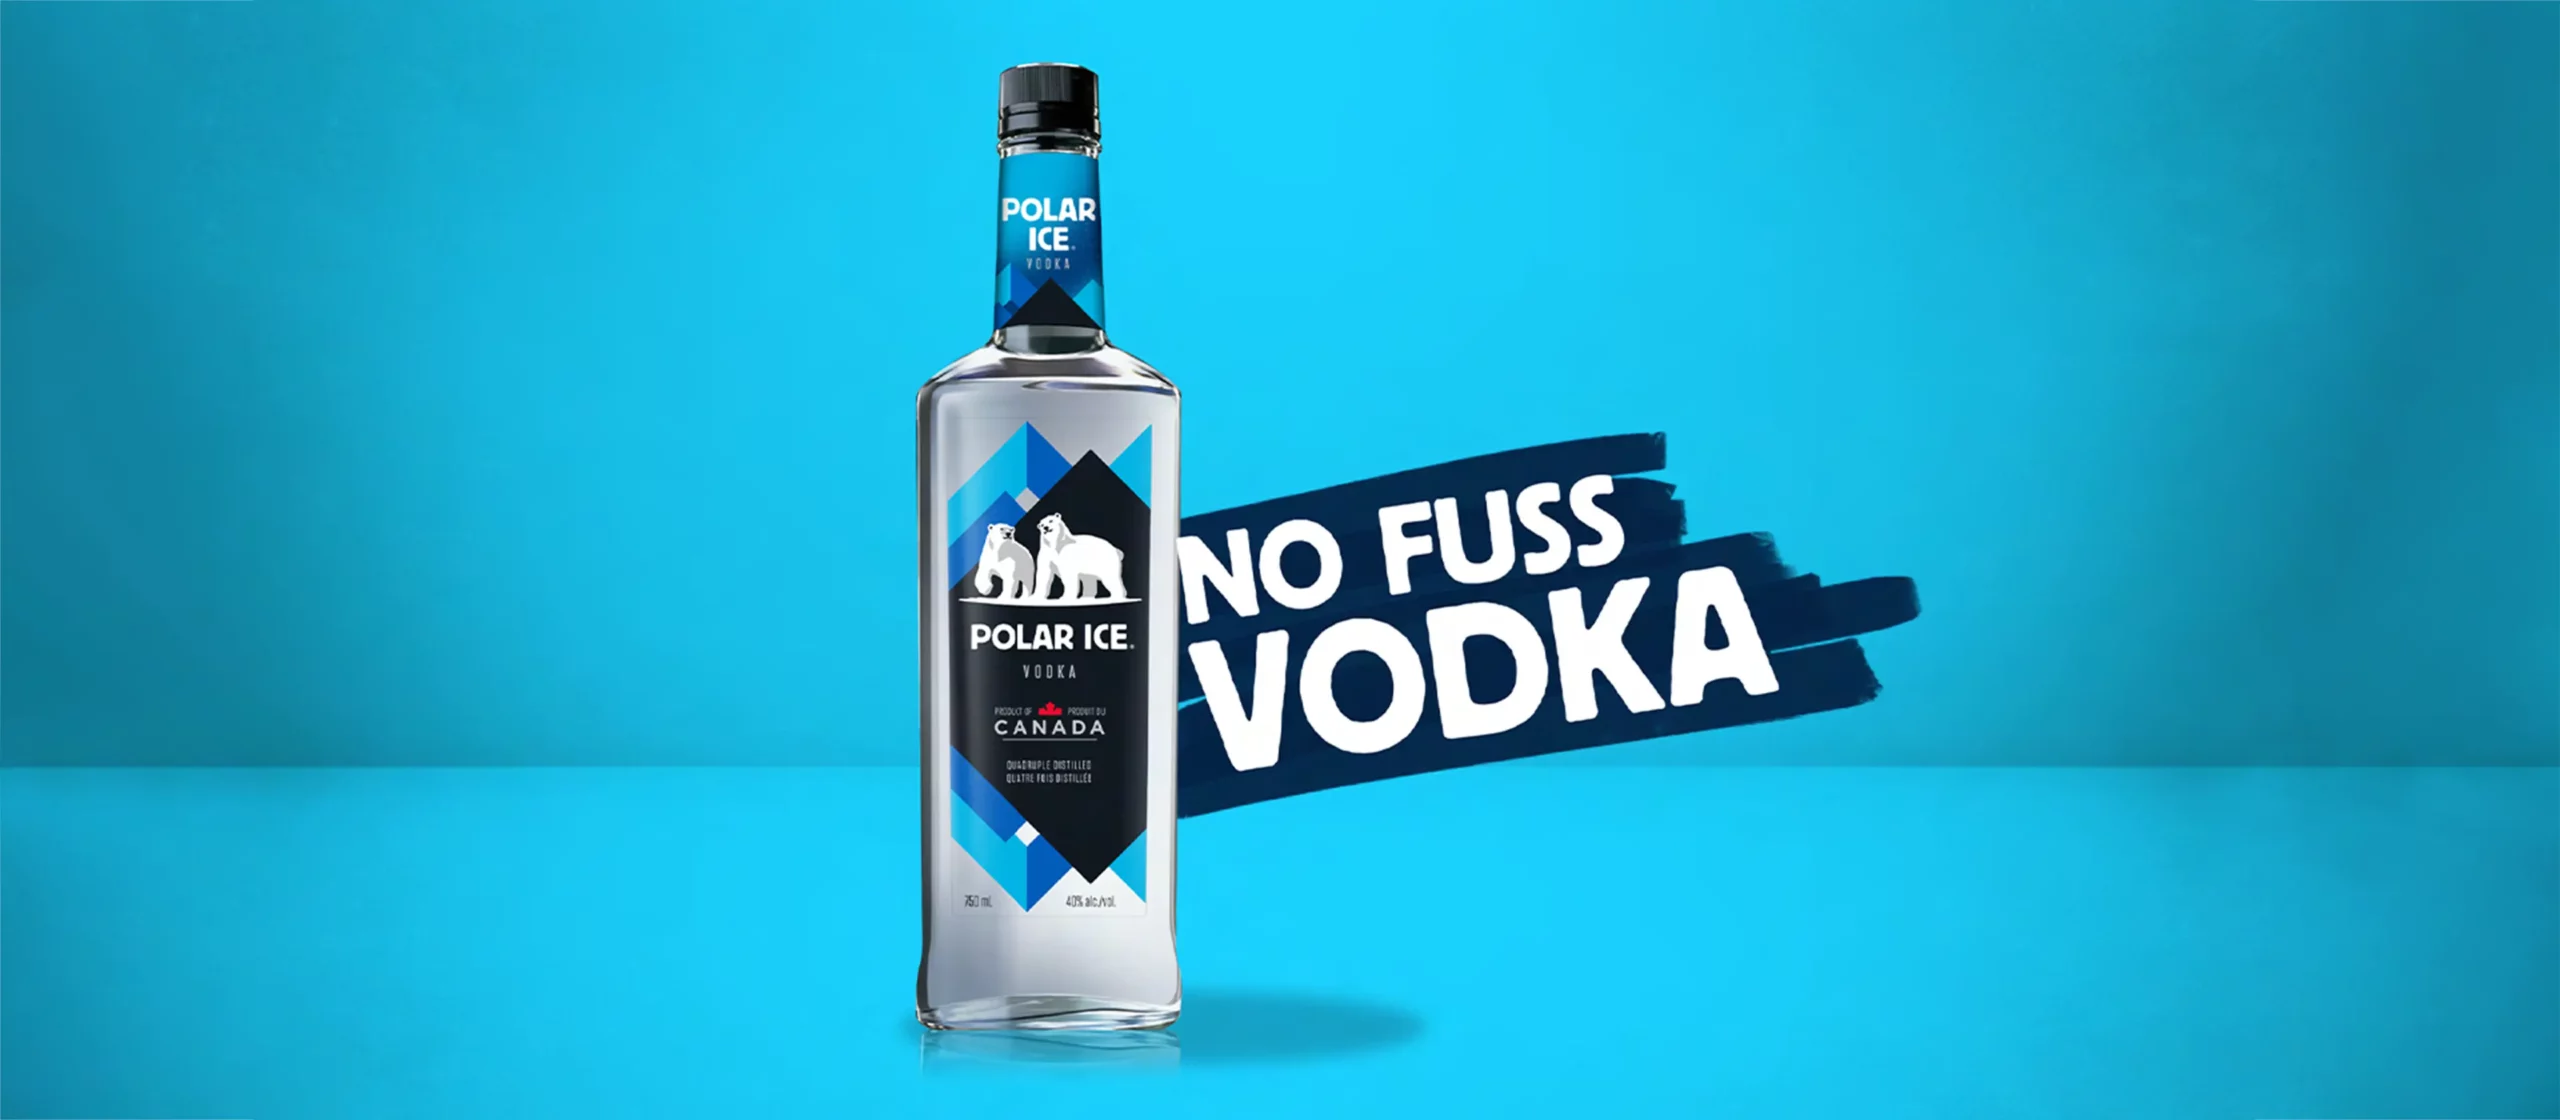 Polar Ice Vodka - No Fuss Vodka